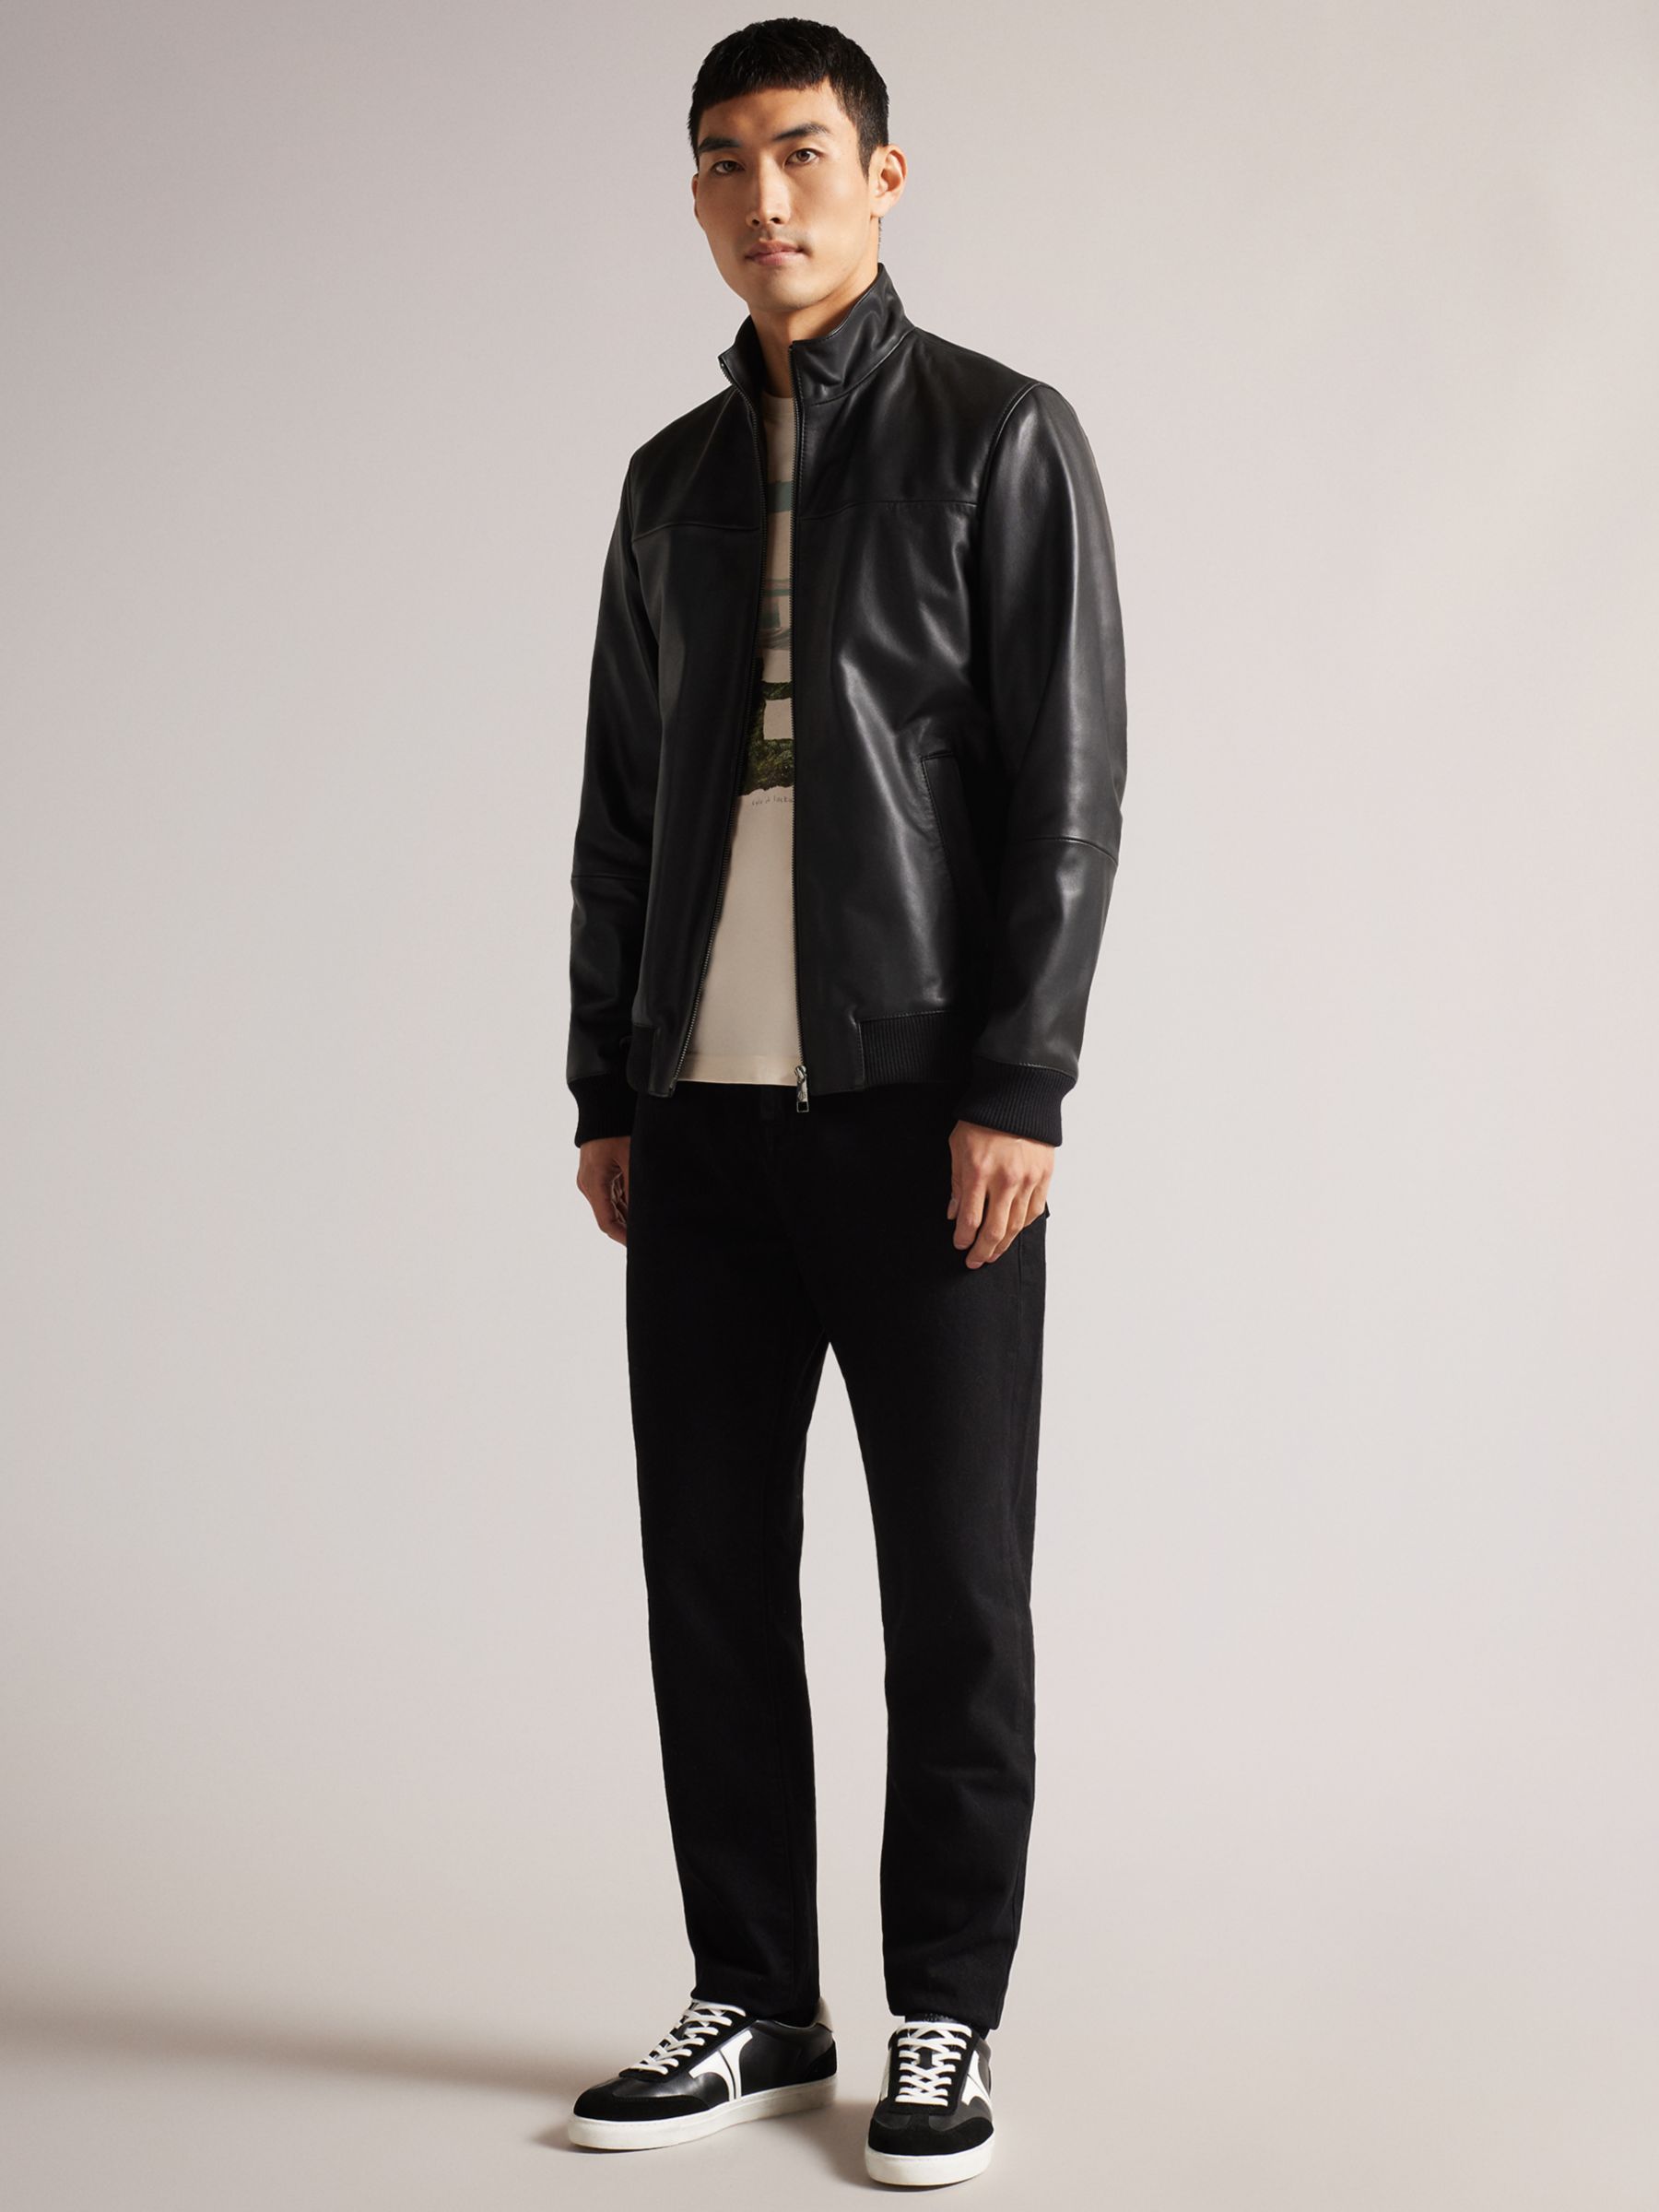 Ted Baker Leadon Leather Jacket, Black, S